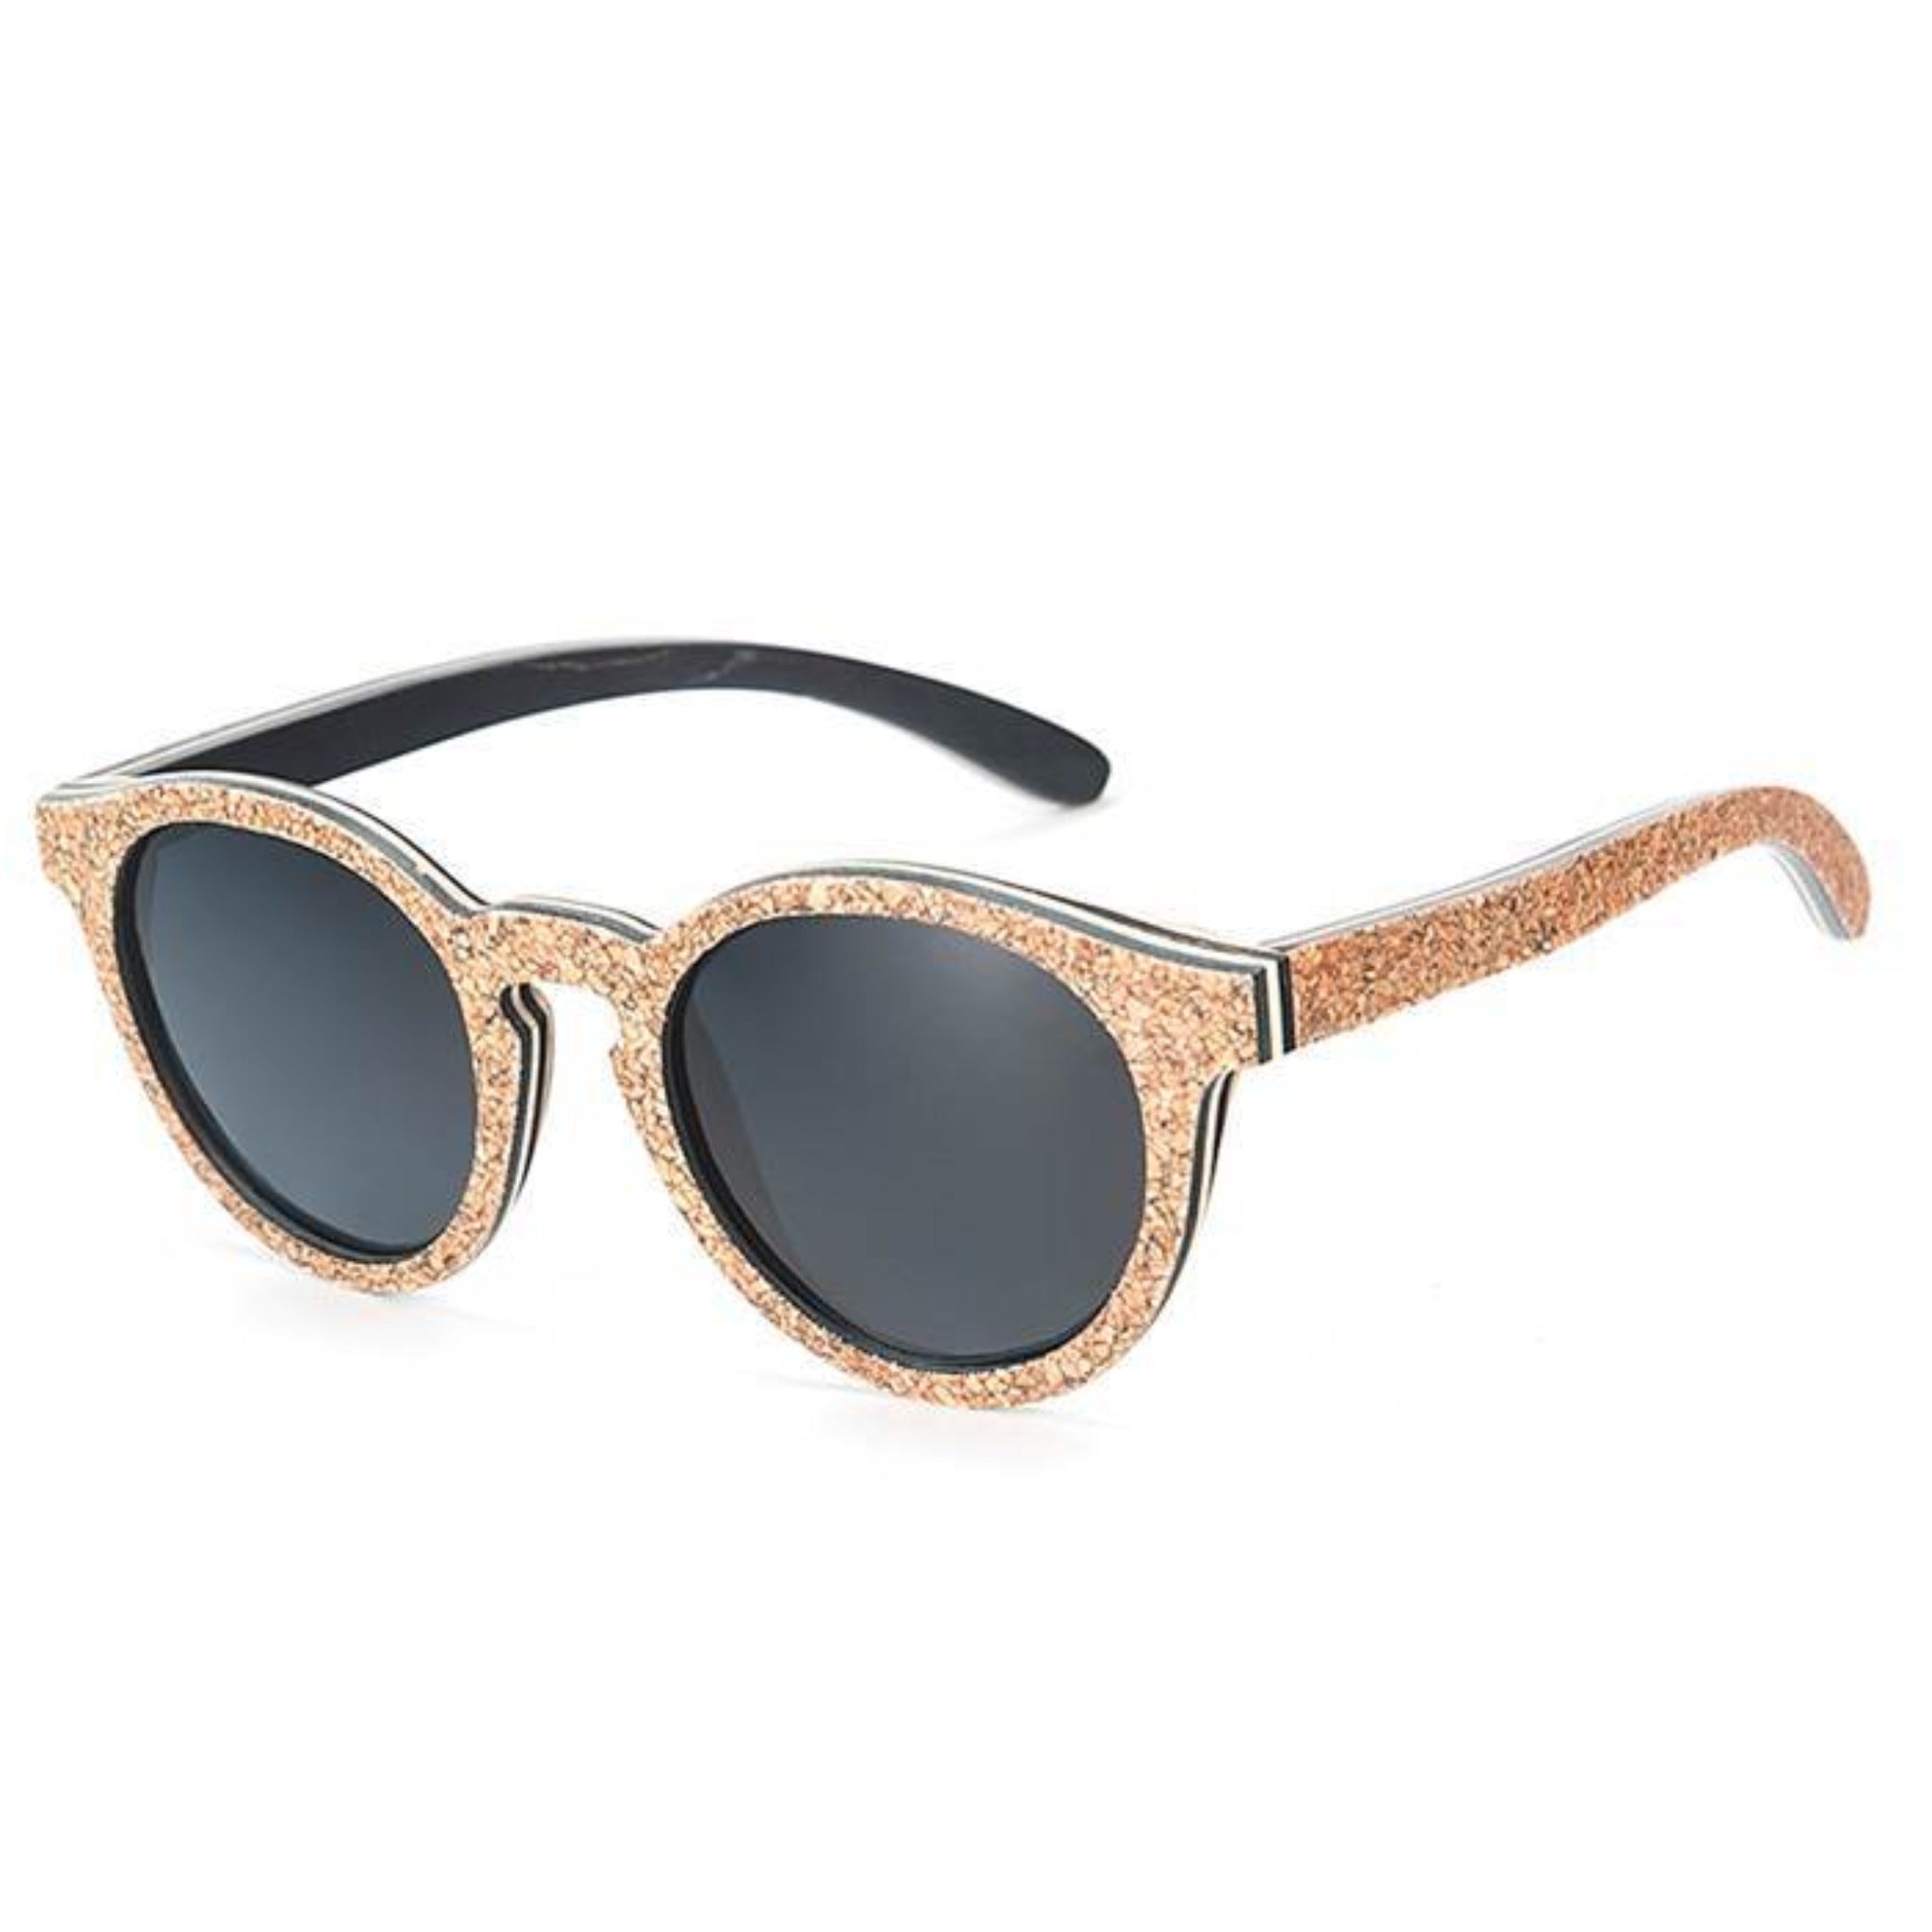 Oak Cork Finish -Handmade Unisex Bamboo Sunglasses - Grey